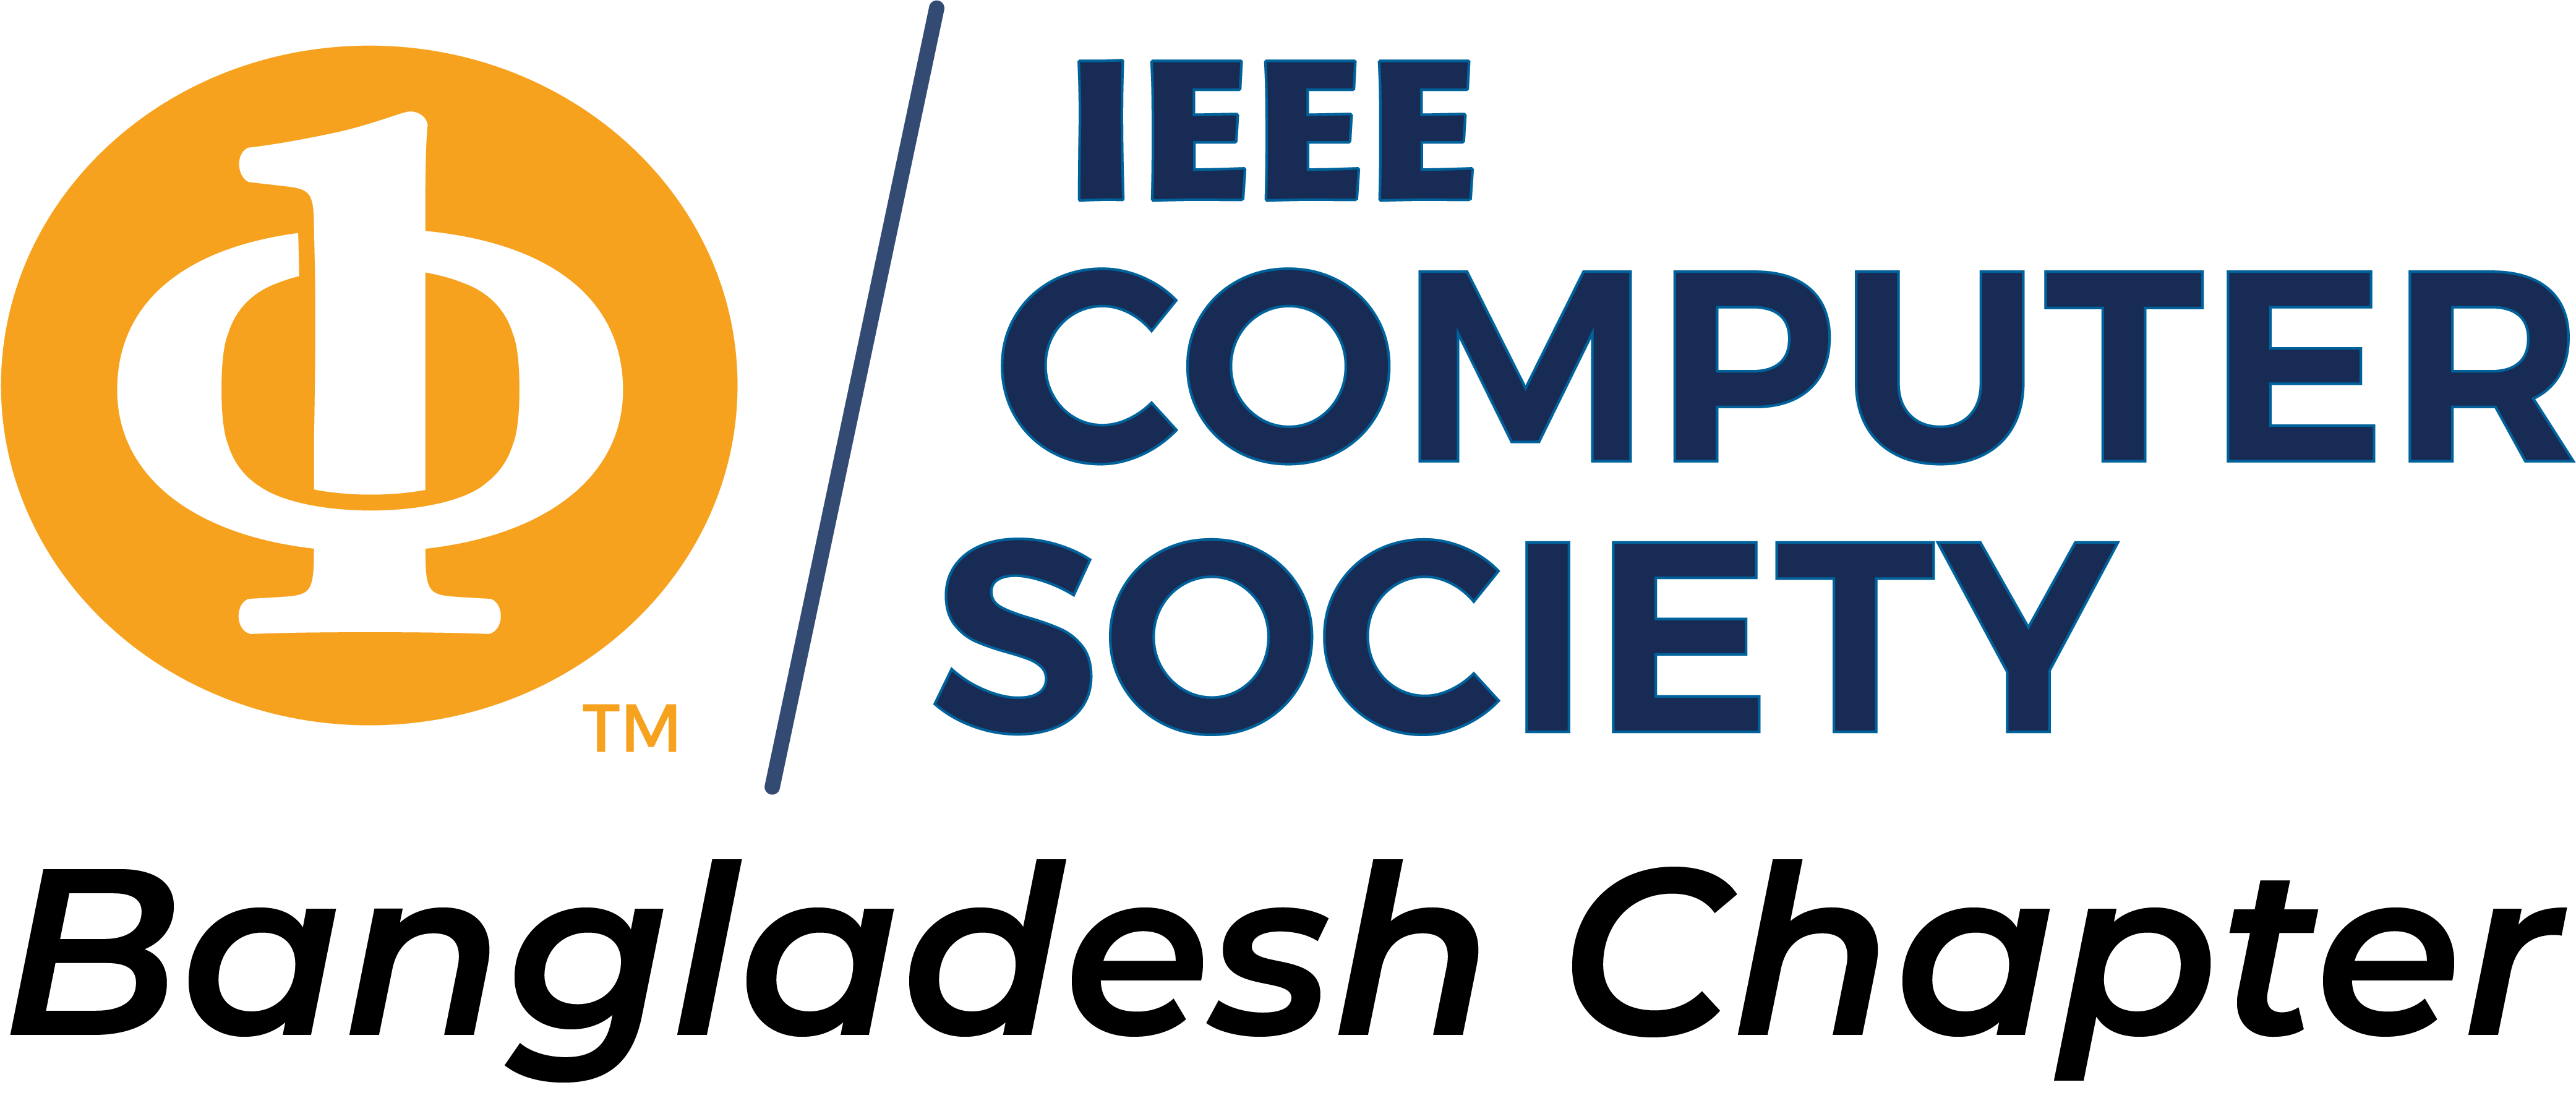 IEEE Computer Society Bangladesh Chapter